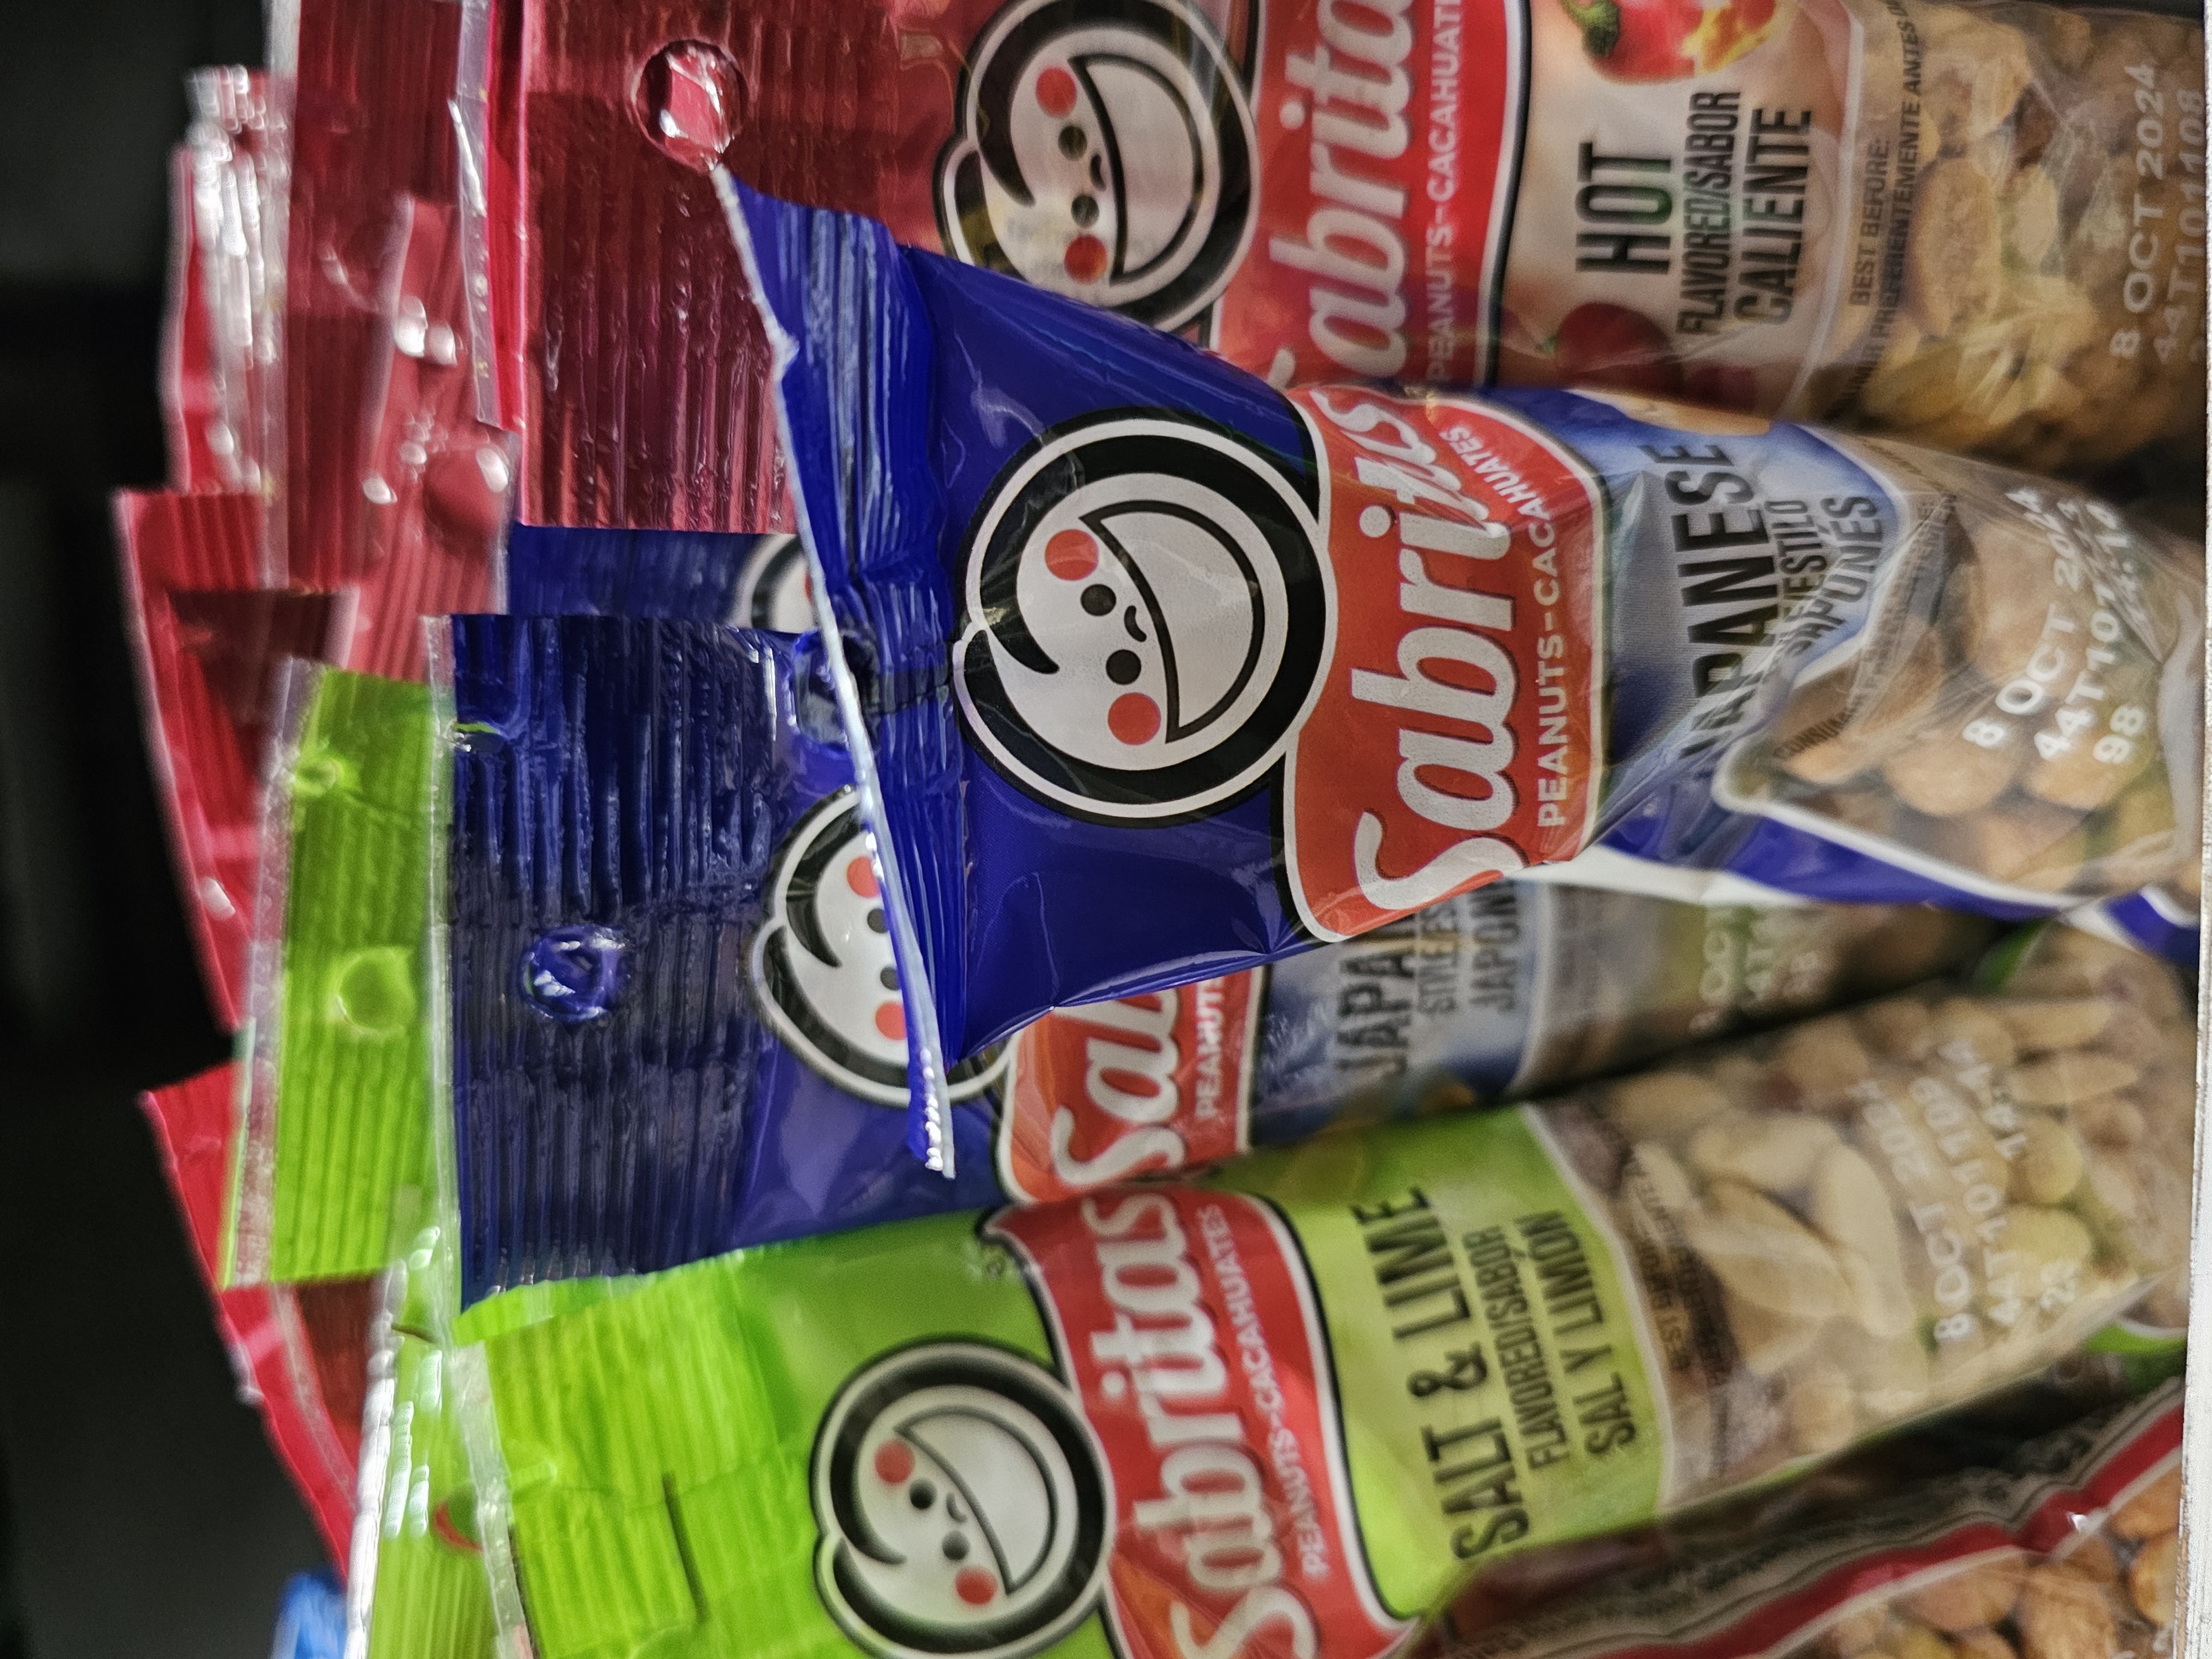 Sabritas Peanuts assorted flavors